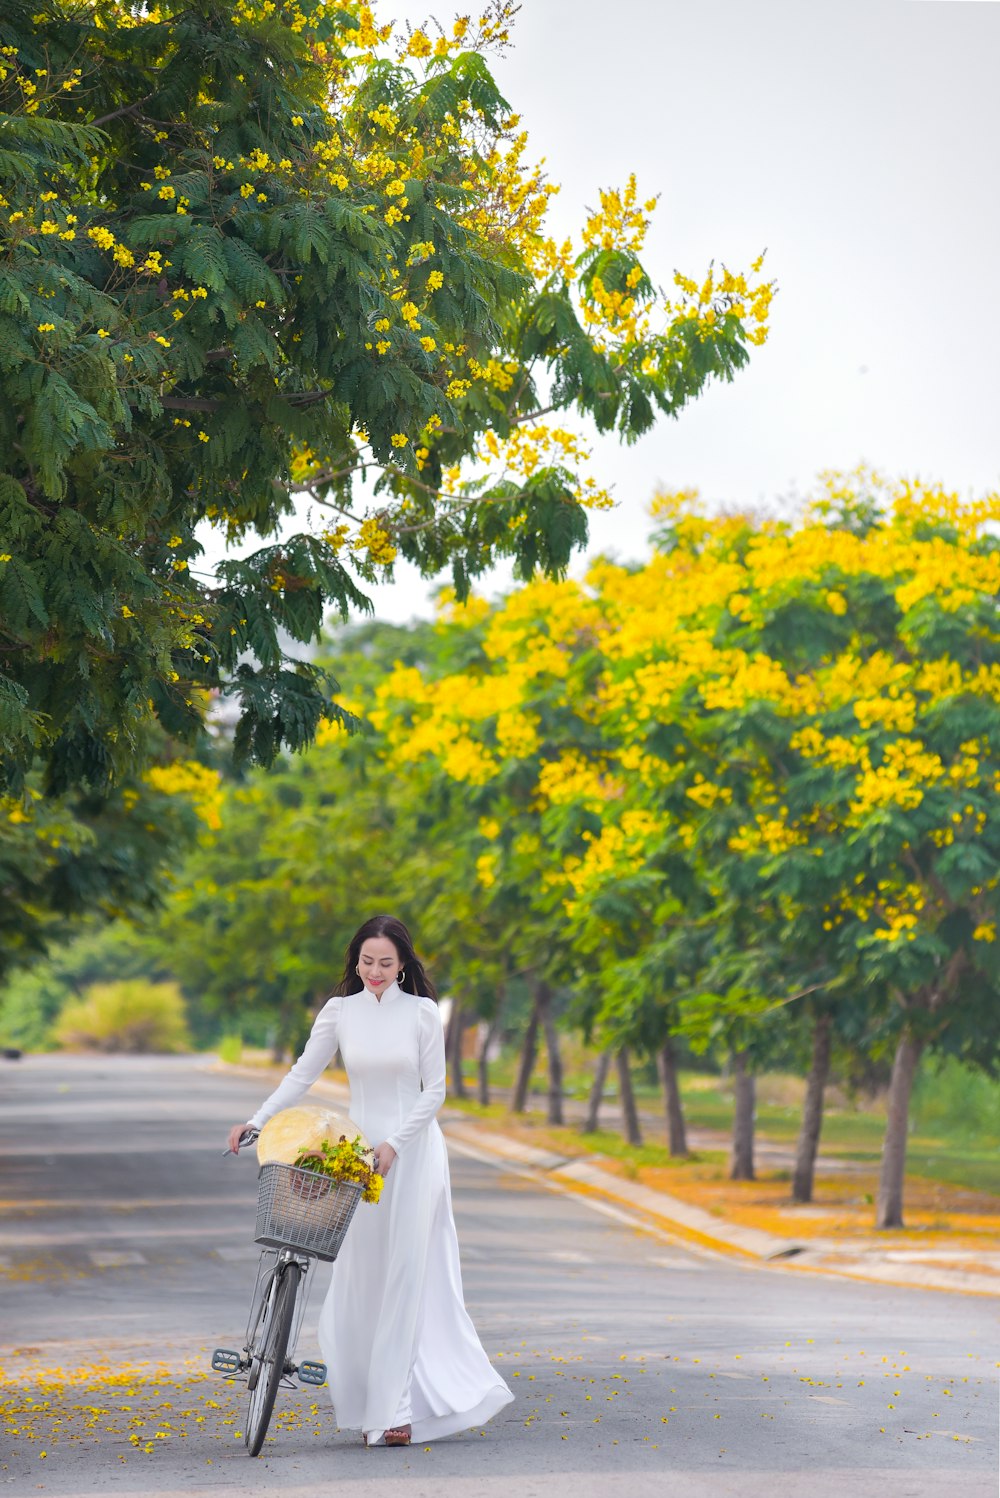 woman in white dress walking on road during daytime